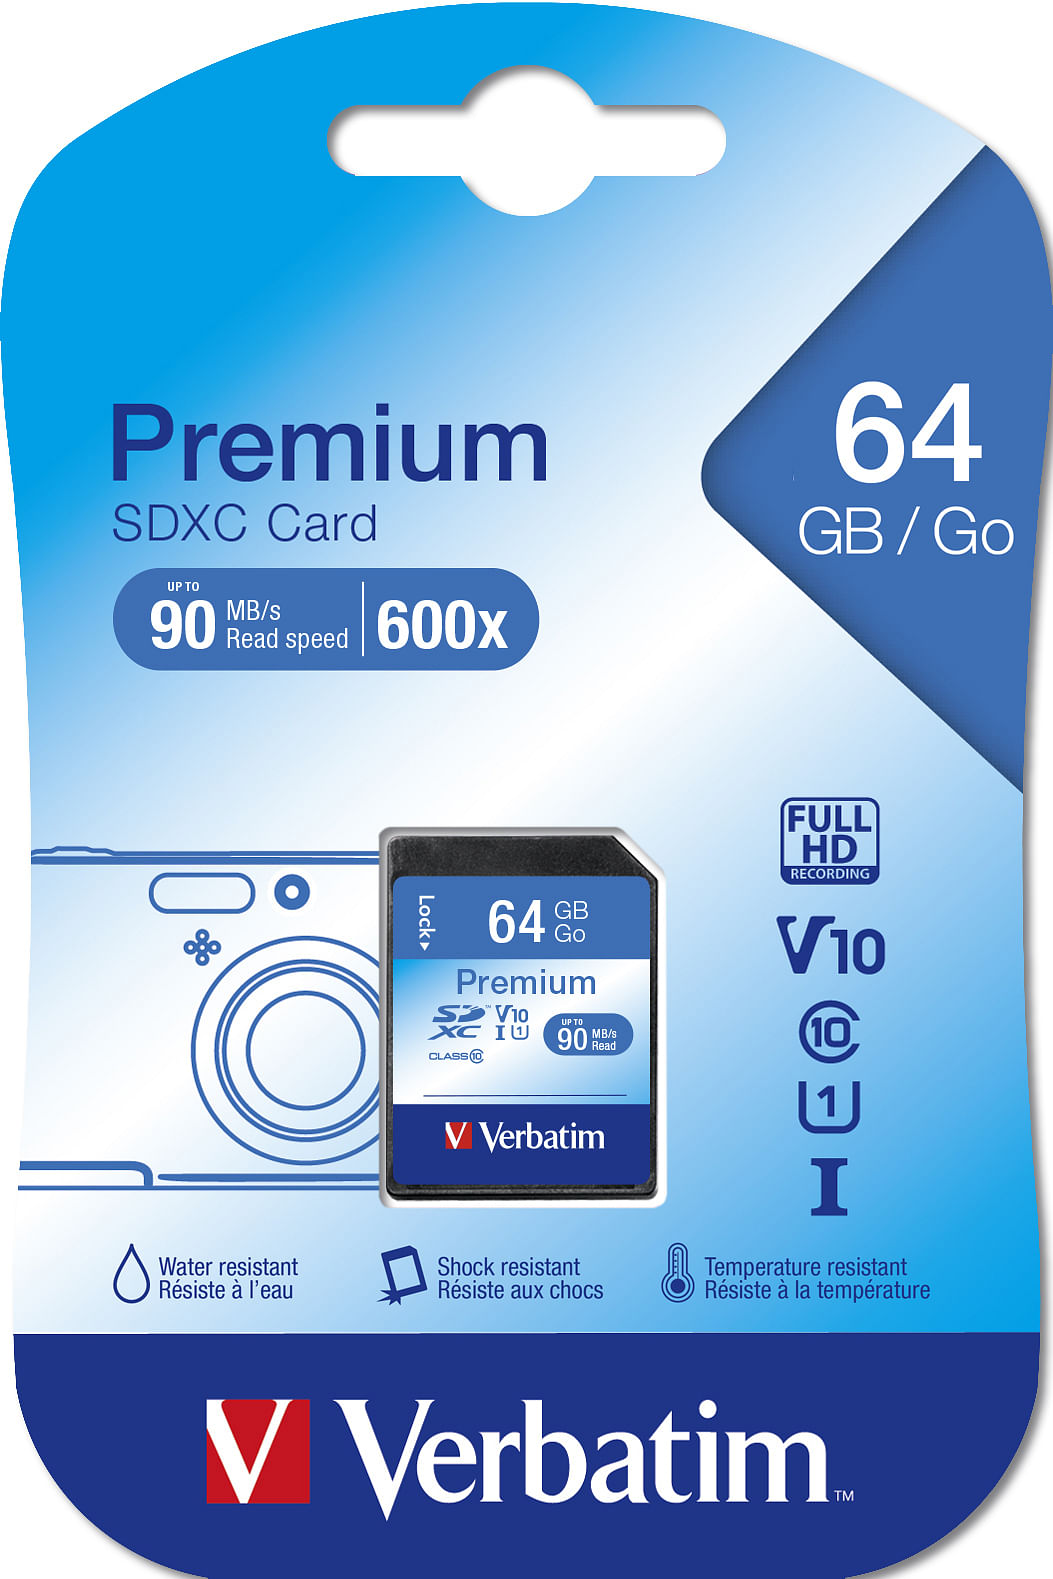 Verbatim VB-SDXC10-64G Premium 64 GB SDXC UHS-1 V10 U1 Class 10 Memory Card